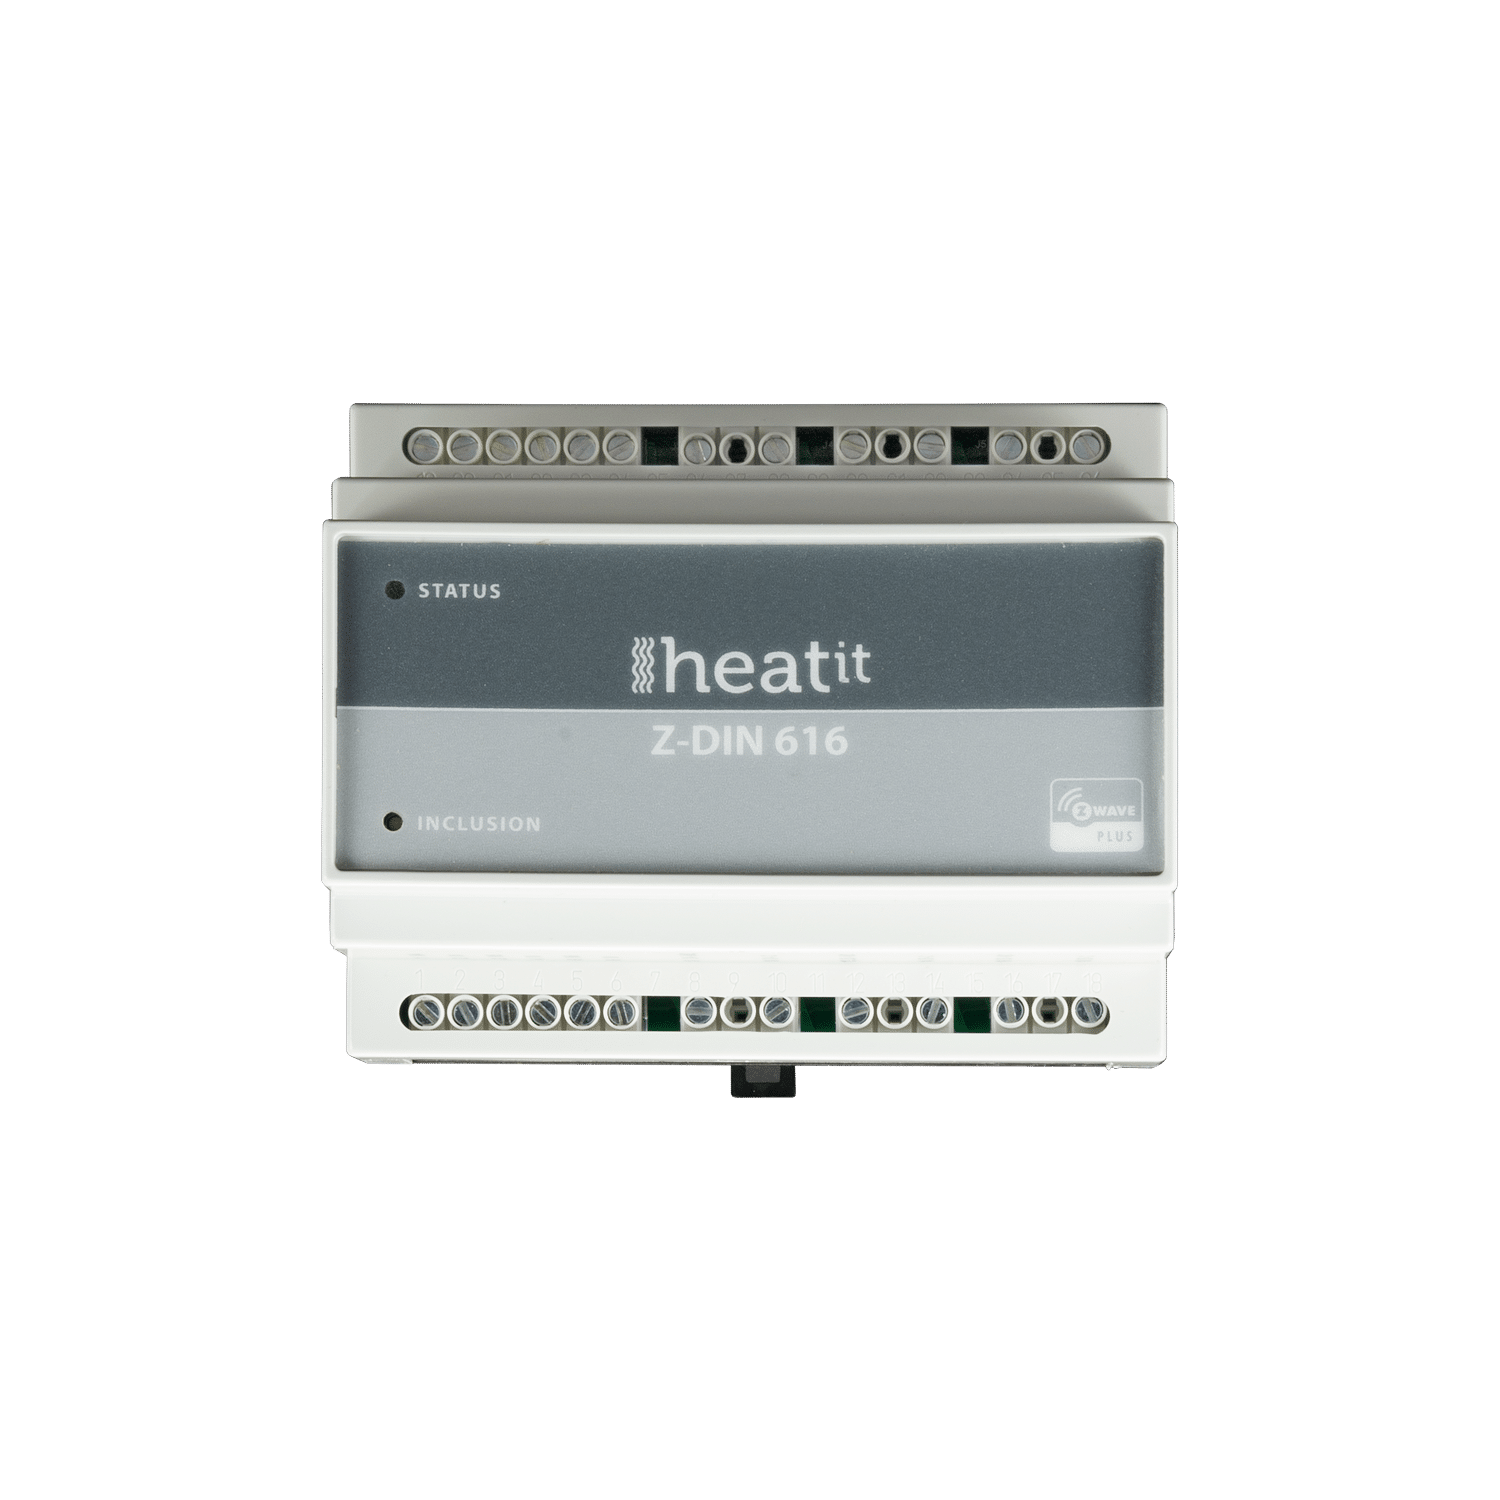 Heatit Z-DIN 616